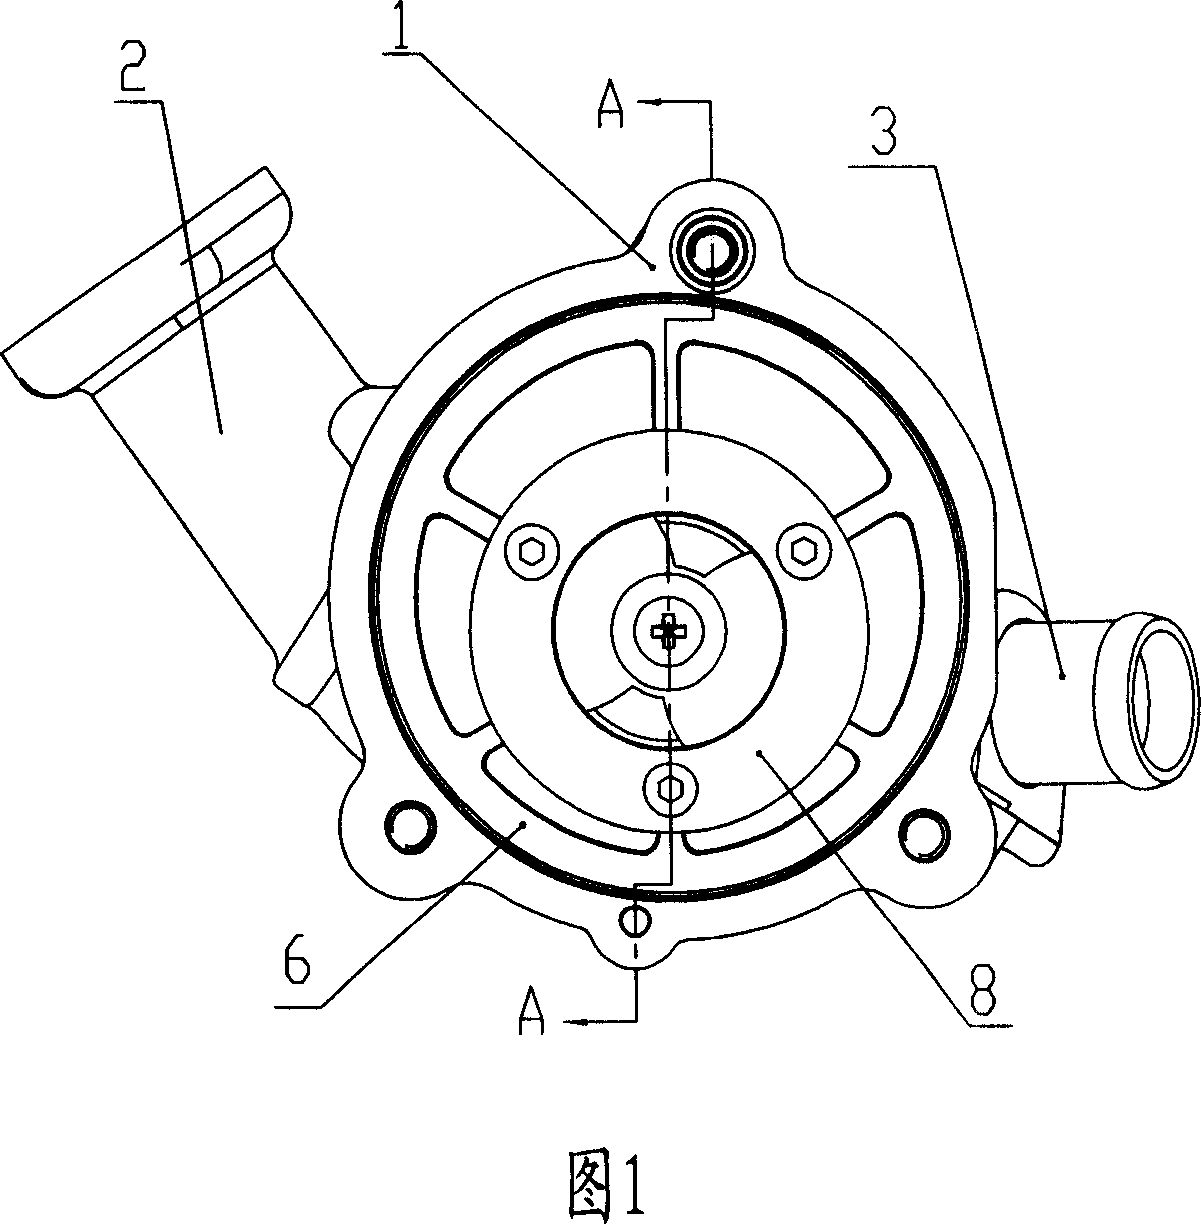 Engine mechanical pressurizing apparatus